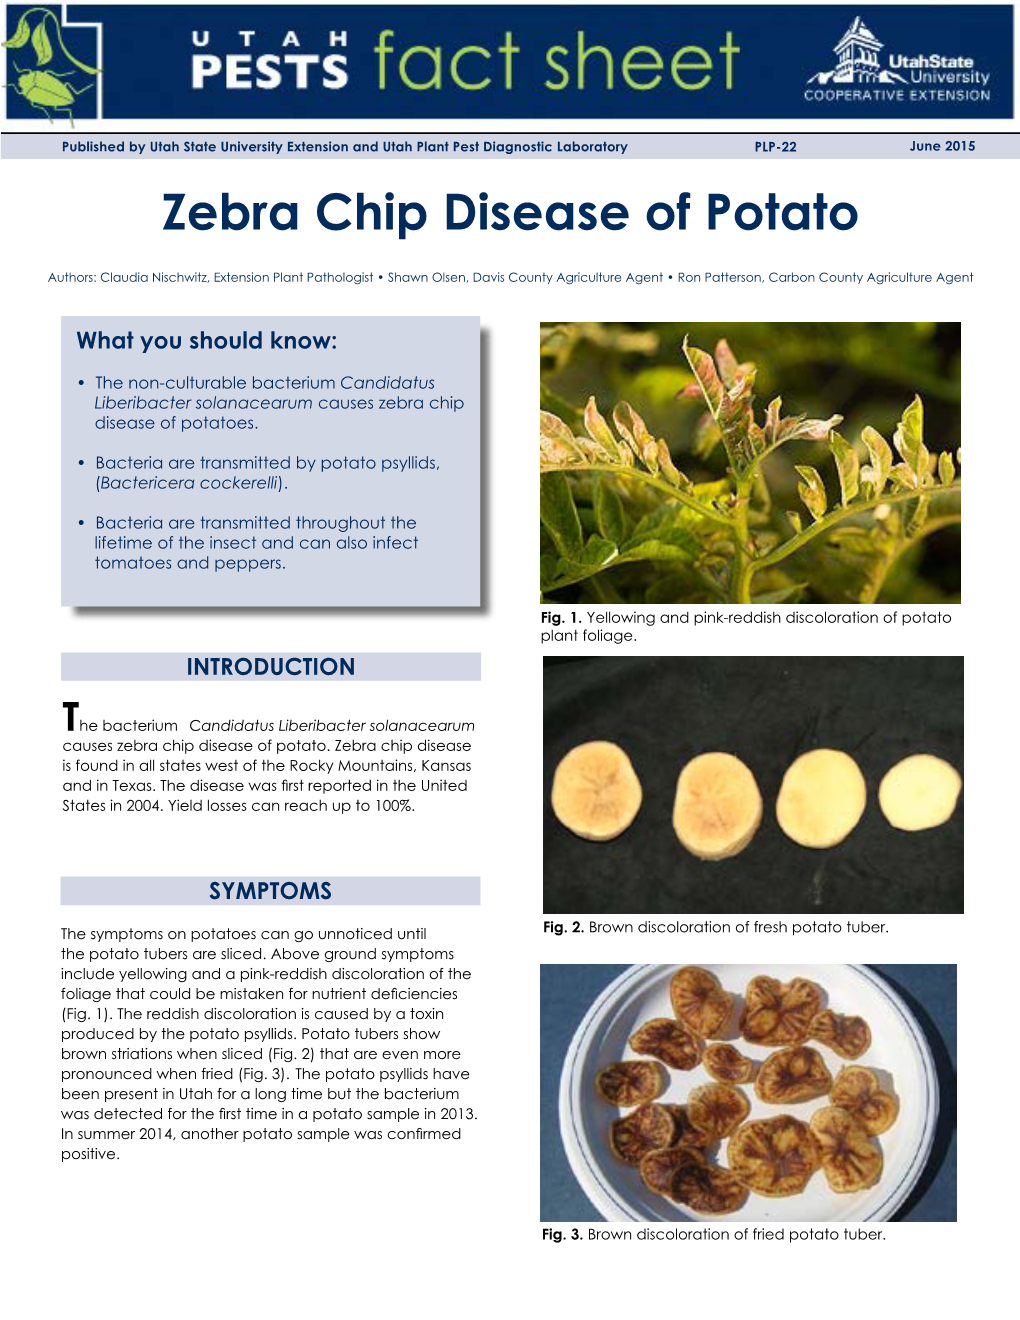 Zebra Chip Disease of Potato